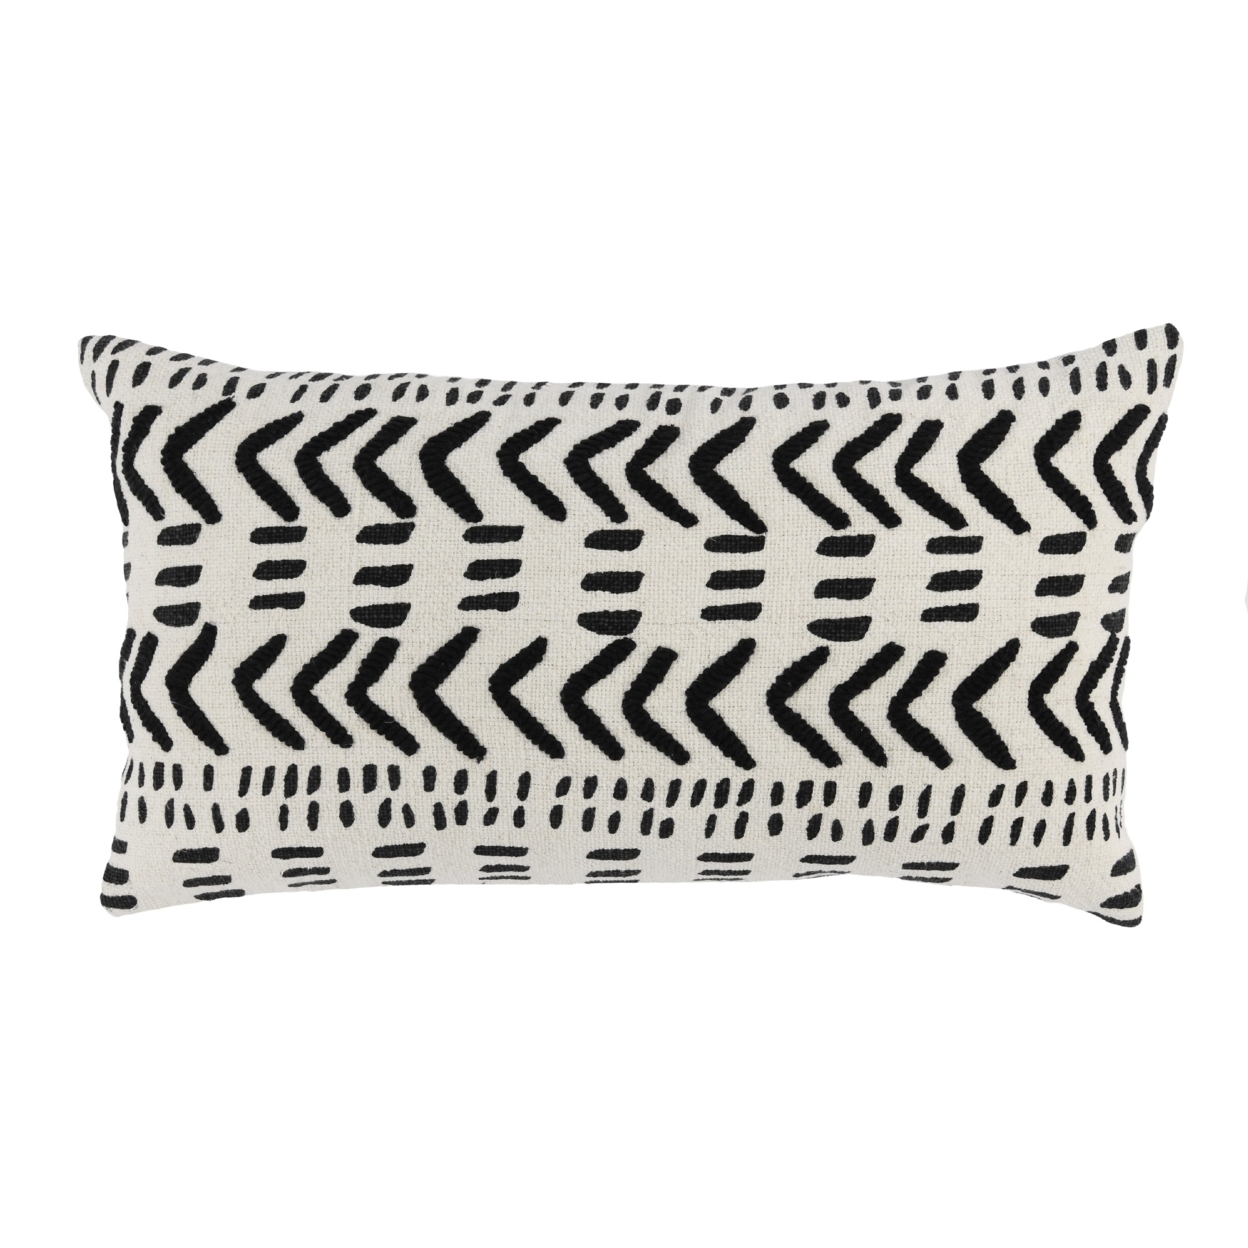 26 Inch Cotton Decorative Lumbar Throw Pillow, Tribal Pattern, Black, White- Saltoro Sherpi